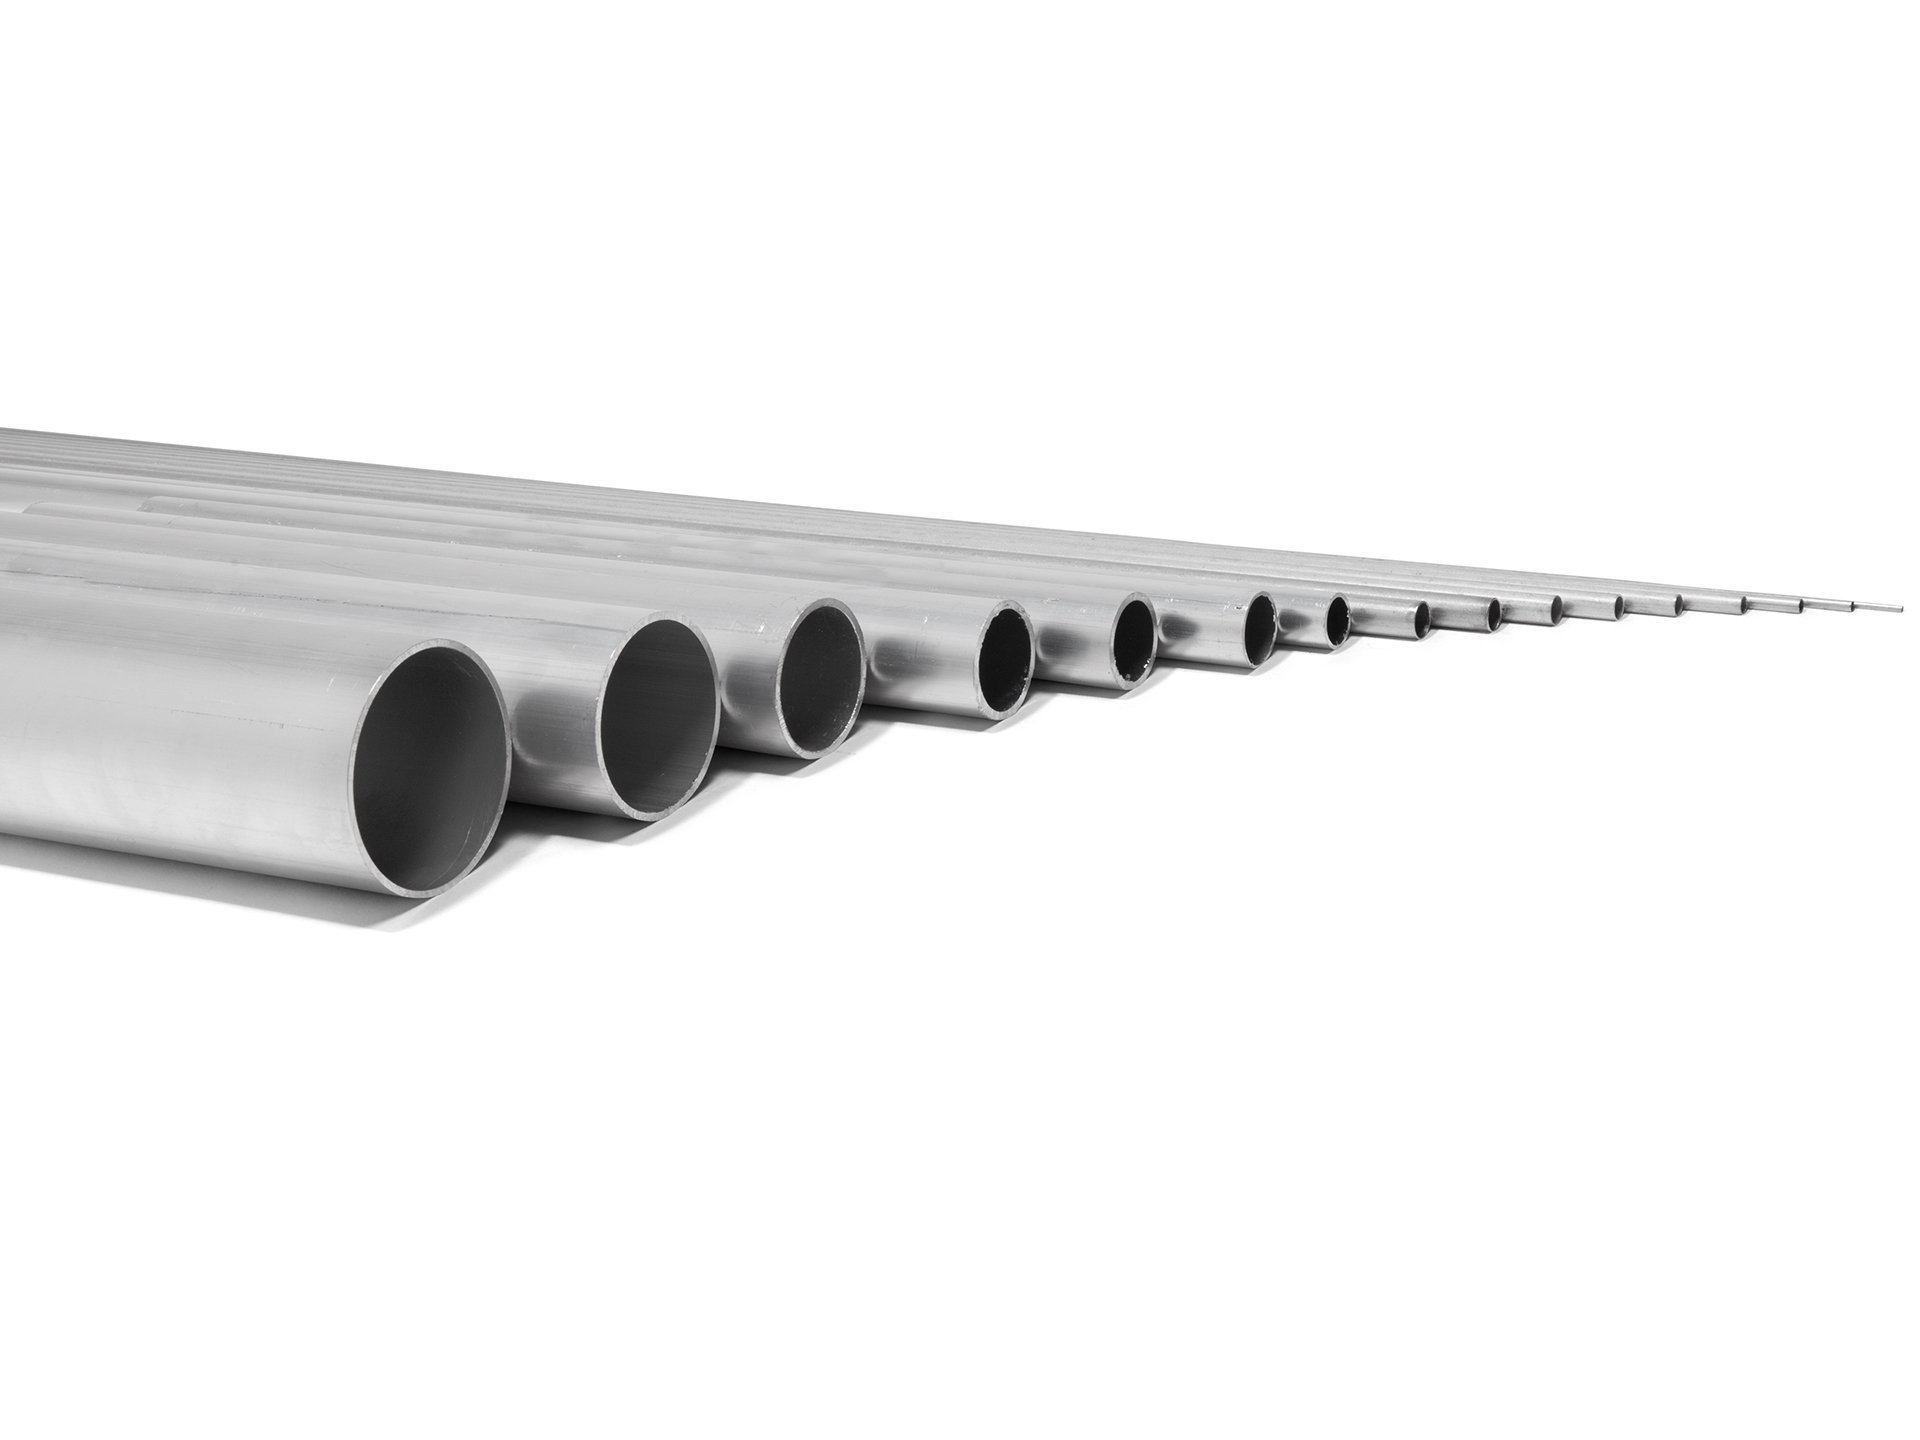 Tubo redondo de aluminio 30x1.4 mm x 2.98 metros - Promart